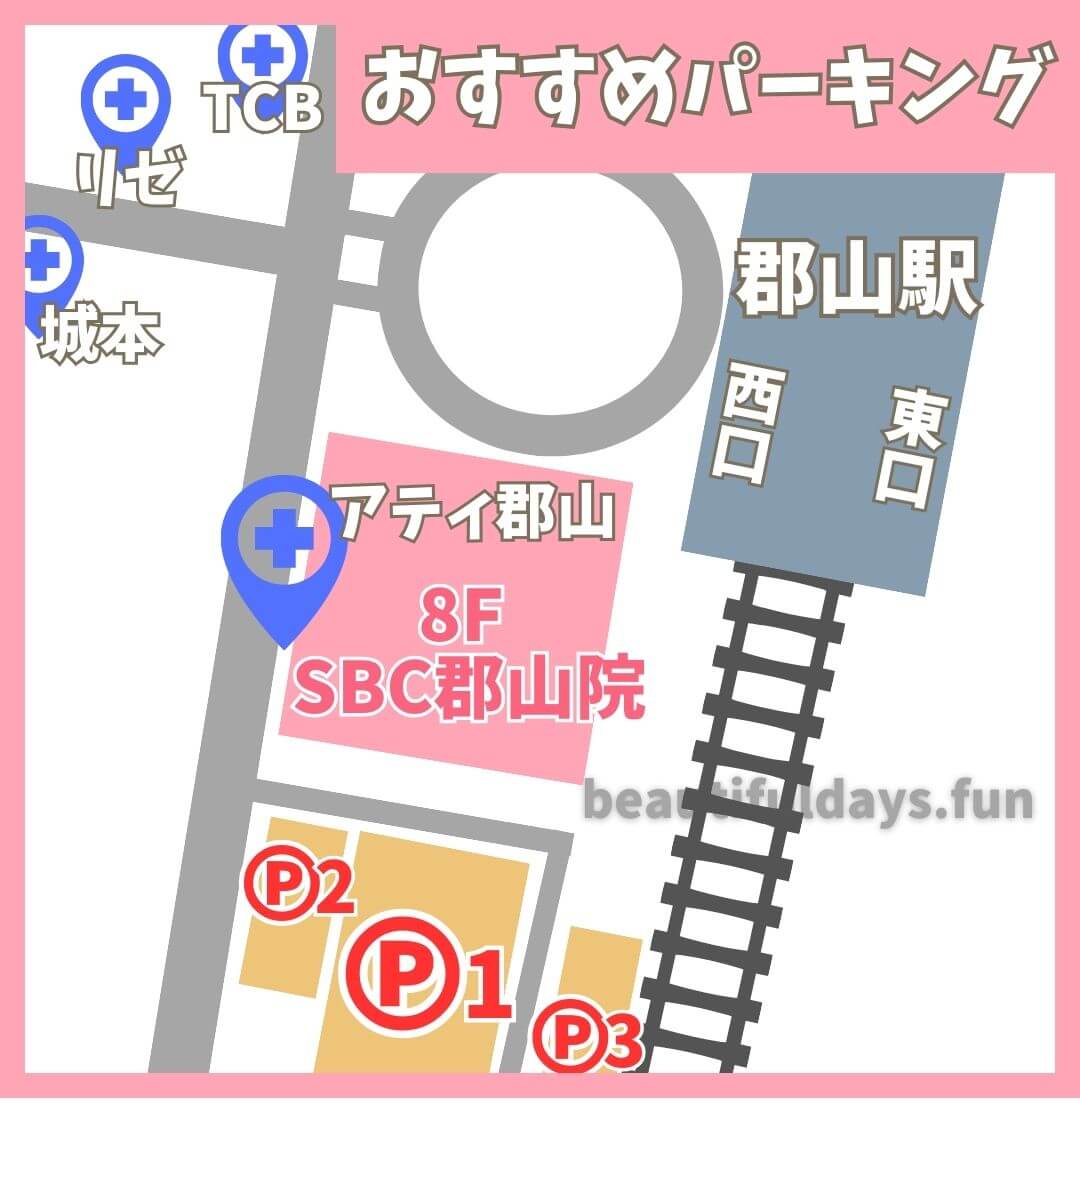 SBC-koriyama-parking (1)